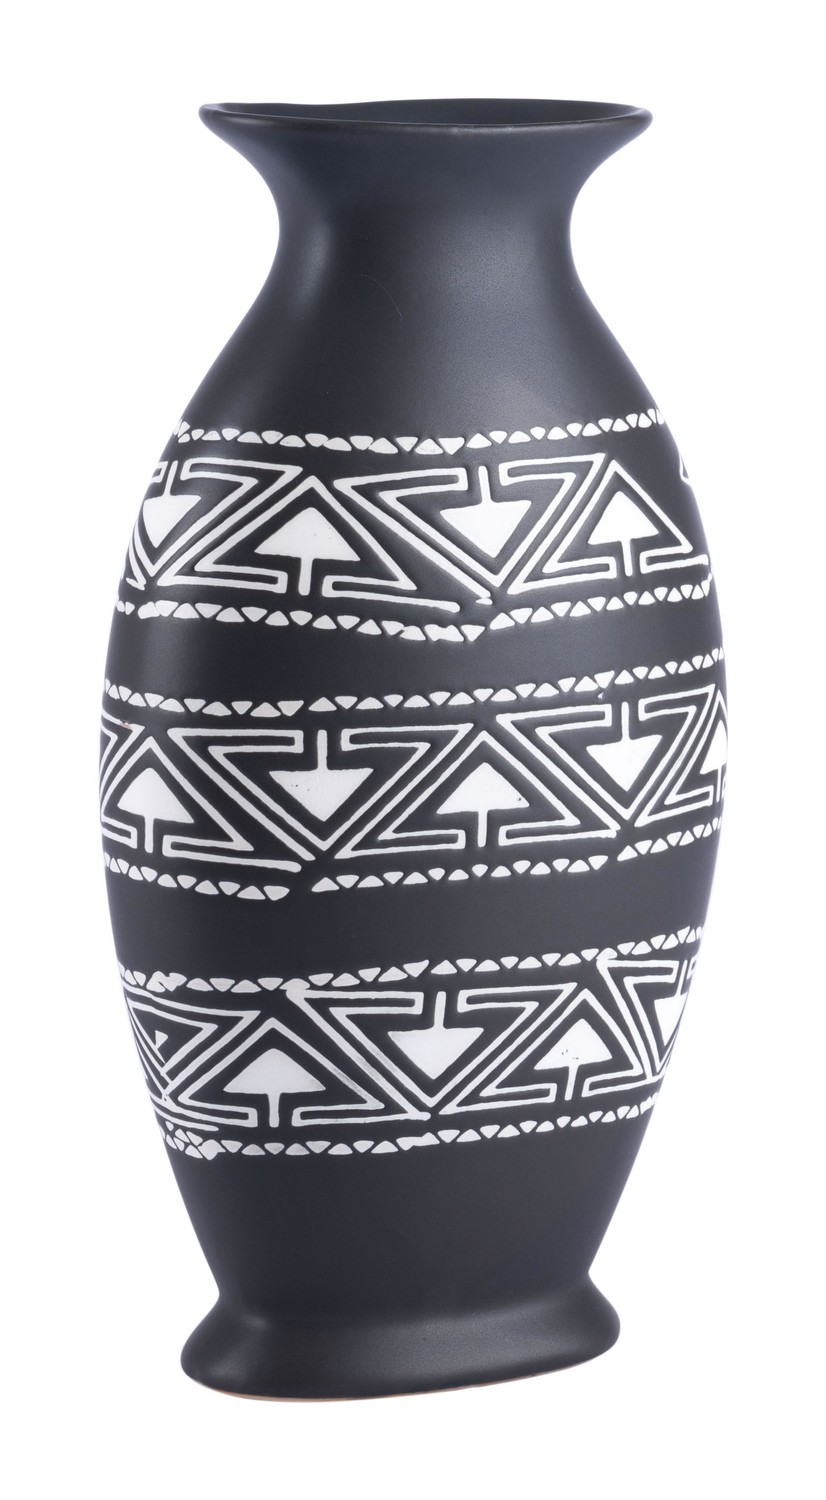 7.5" x 4.1" x 14" Black & White, Ceramic, Large Vase